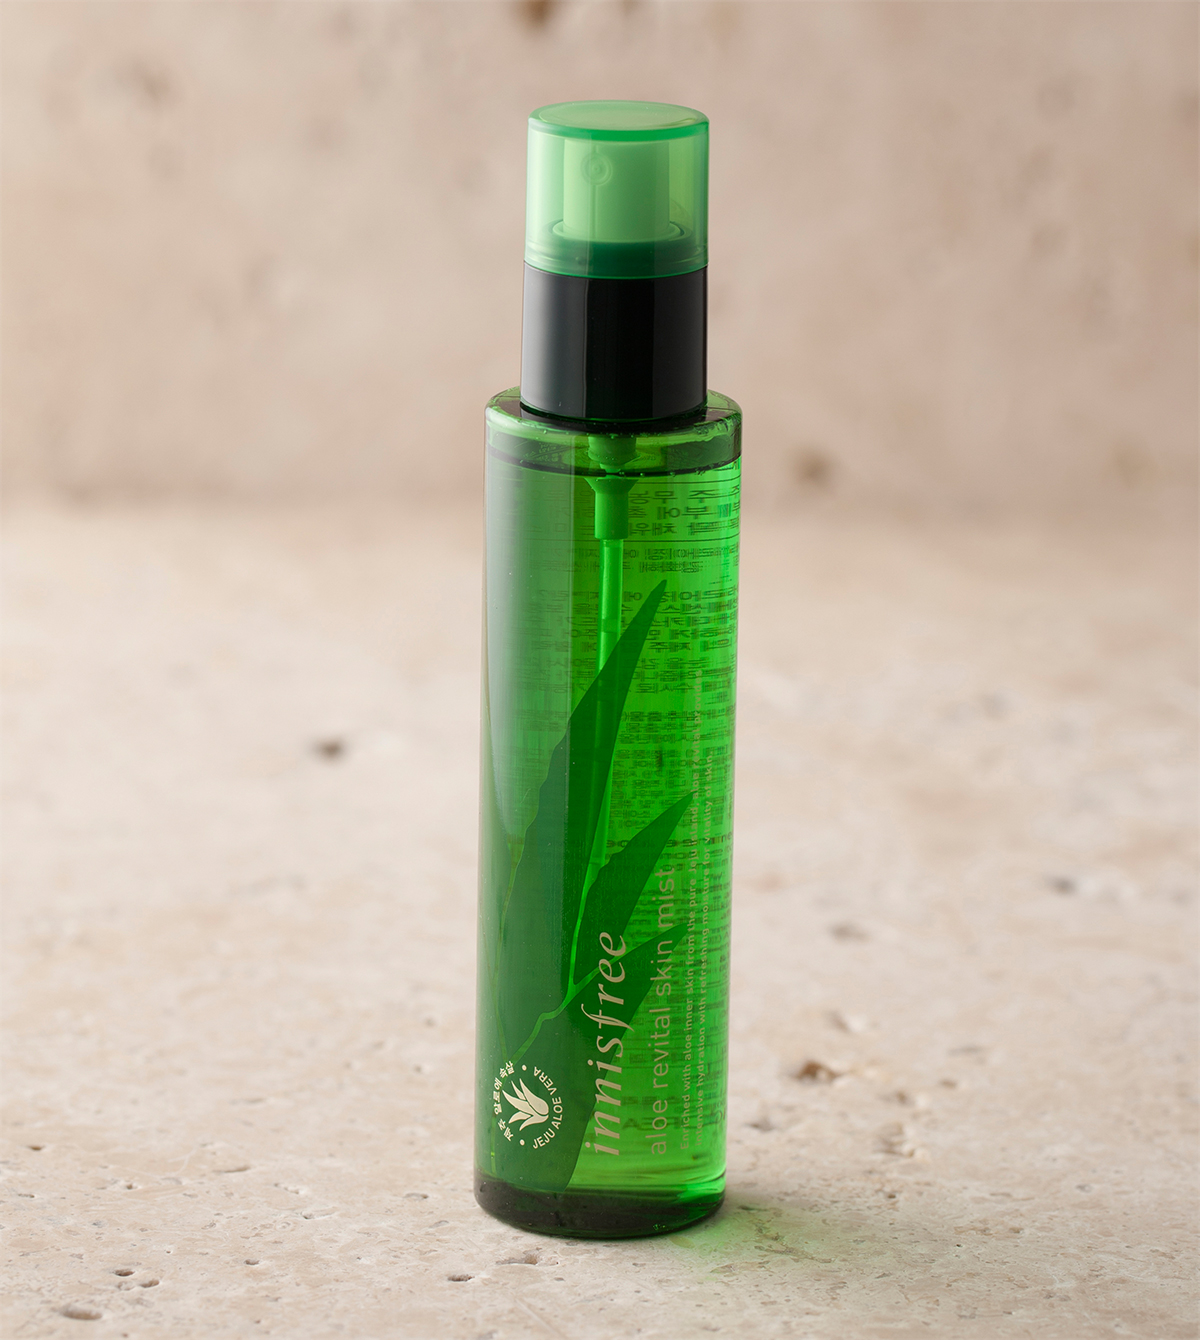 Innisfree Aloe Revital Skin Mist - Innisfree Skin Care - Top 10 Moisturizers from Innisfree India to Try this Season